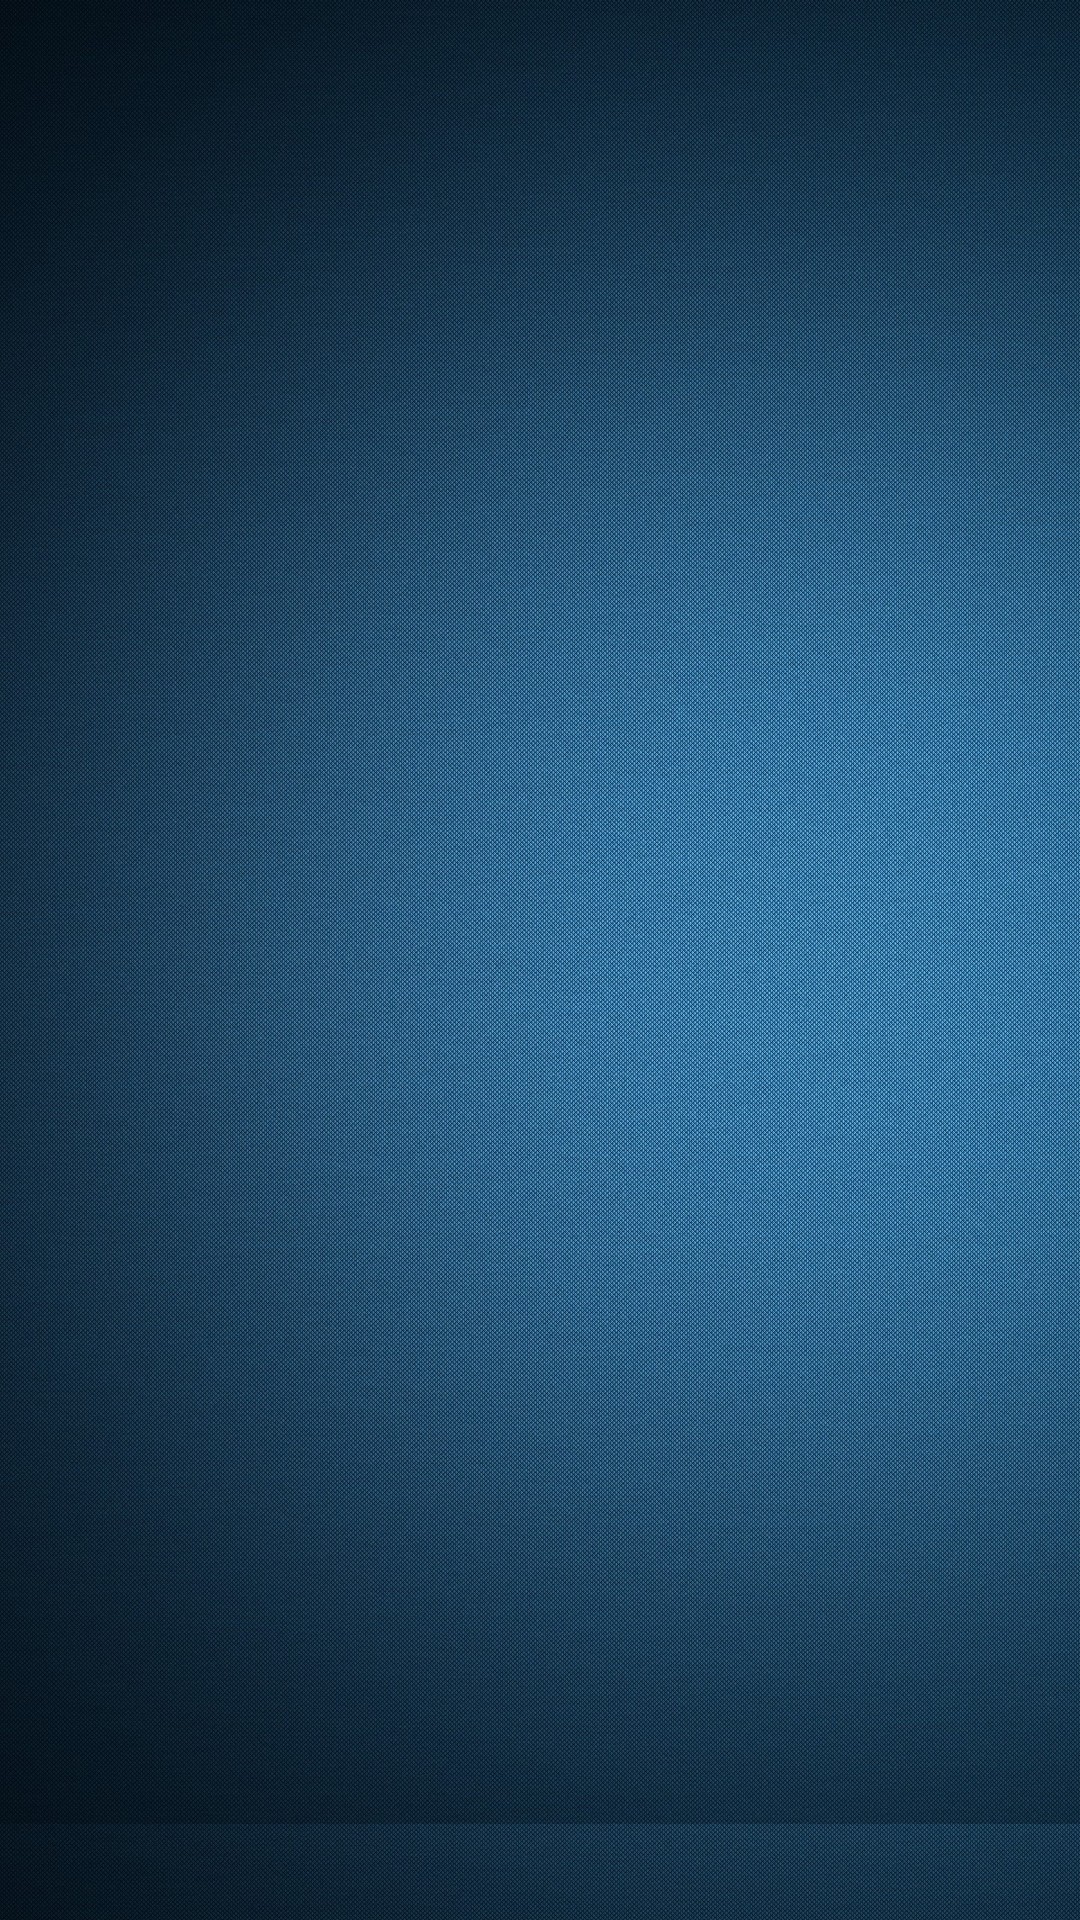 Blue Design iPhone Wallpaper resolution 1080x1920